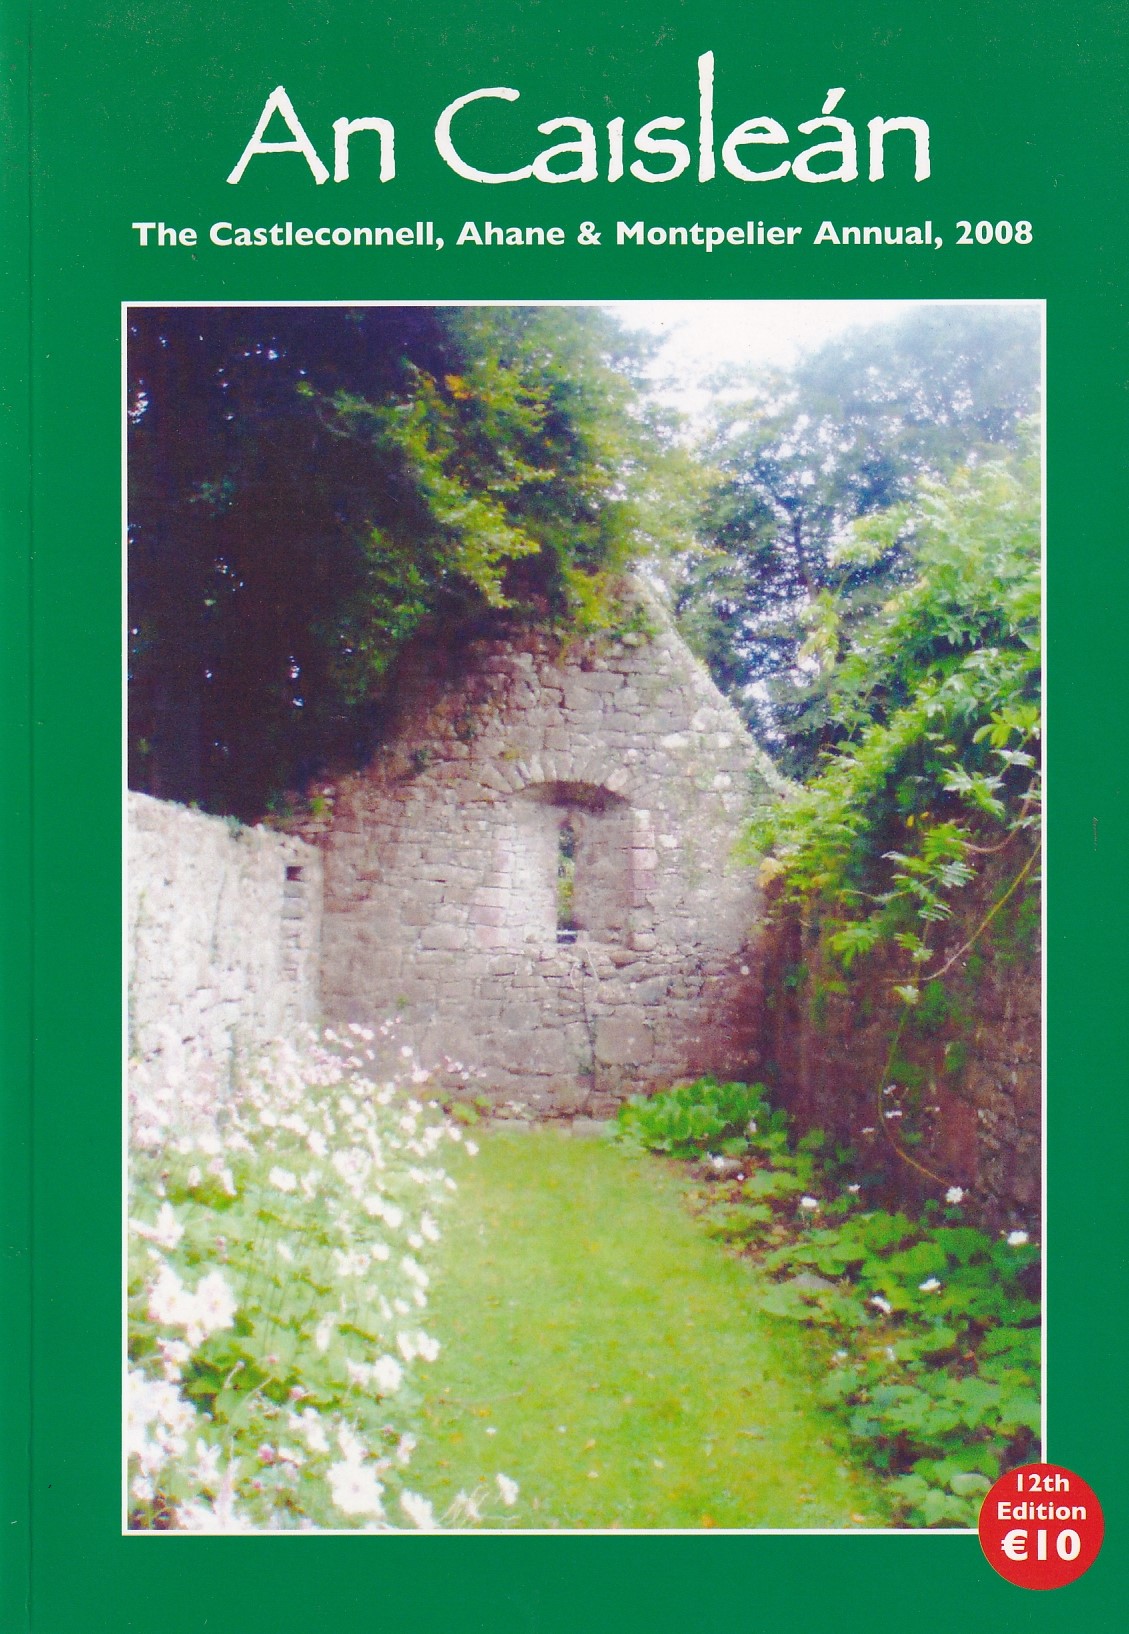 An Caisleán: The Castleconnell, Ahane & Montpelier Annual, 2008 by Various